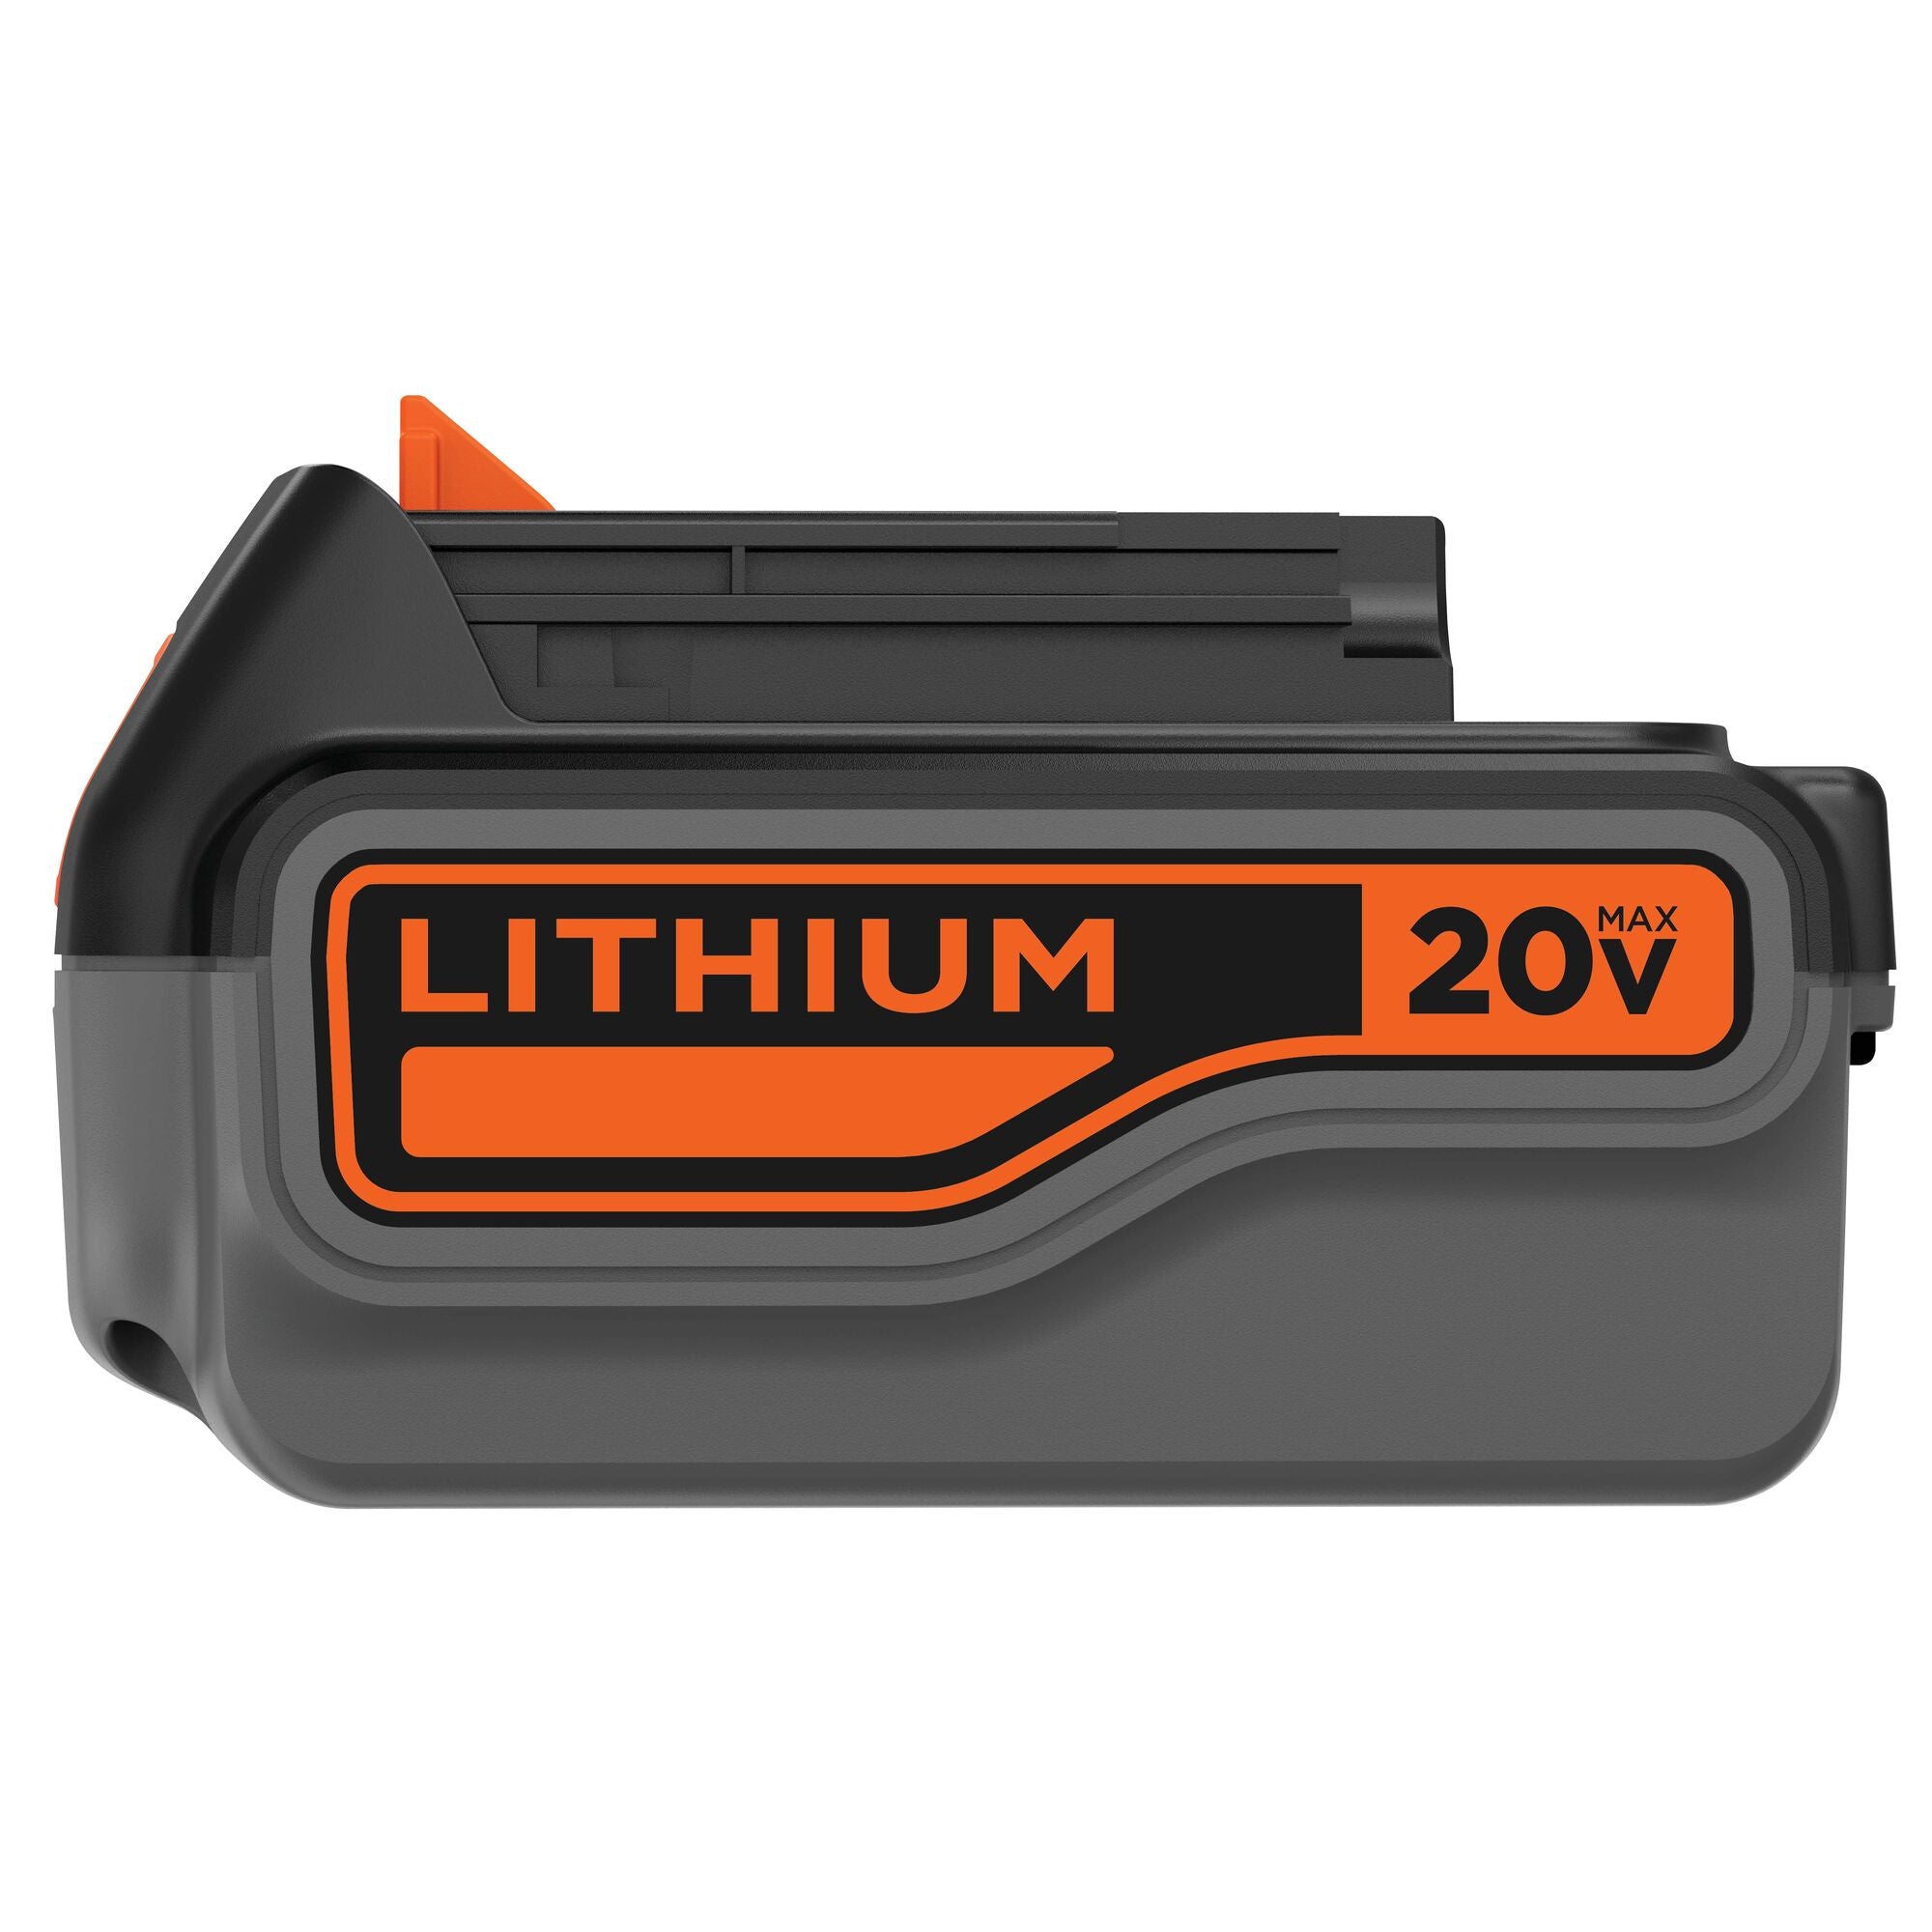  BLACK+DECKER 20V MAX Battery, 1.5Ah Lithium Ion